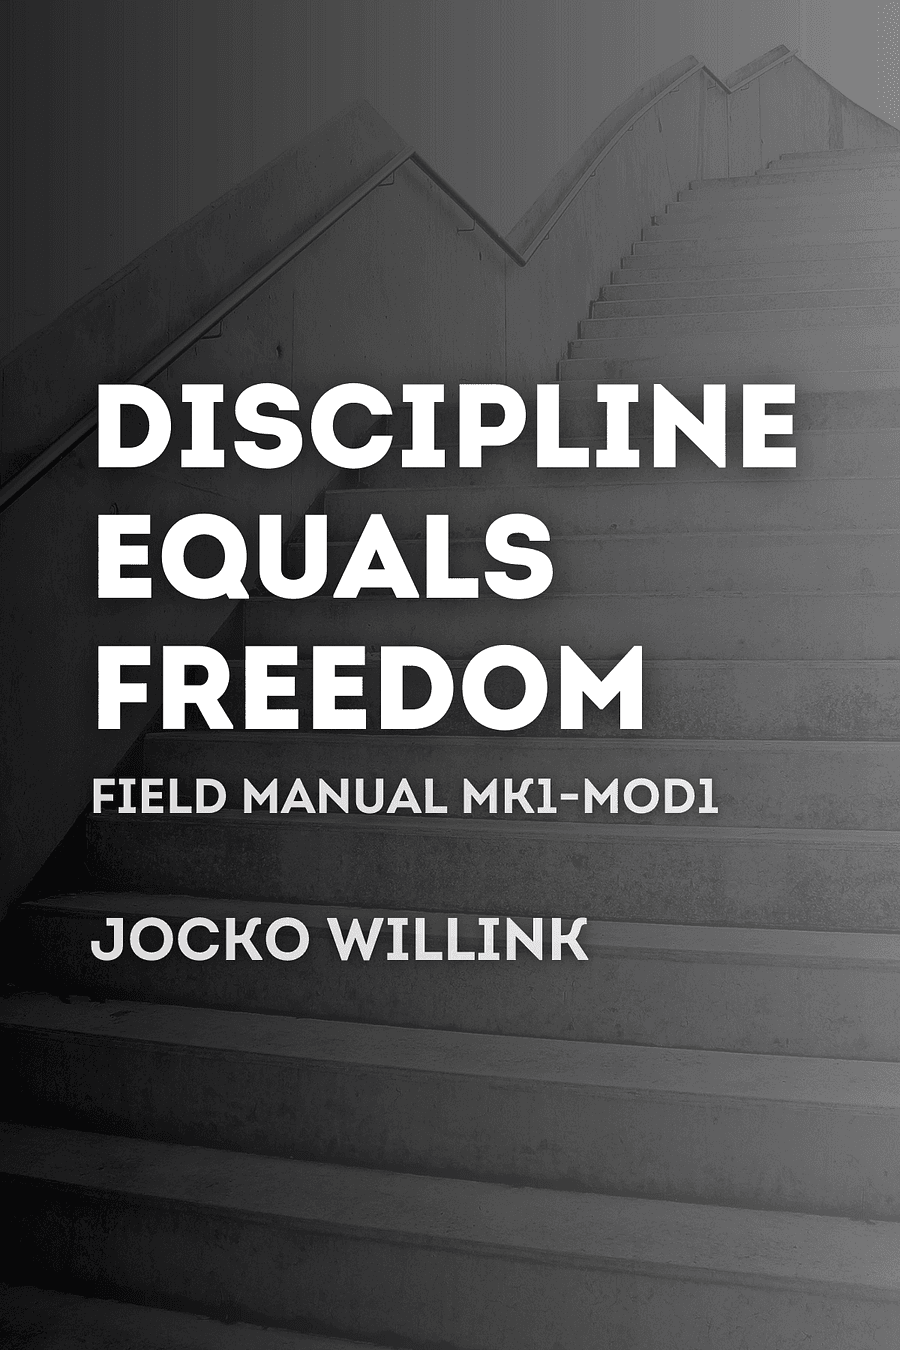 Discipline Equals Freedom by Jocko Willink - Book Summary